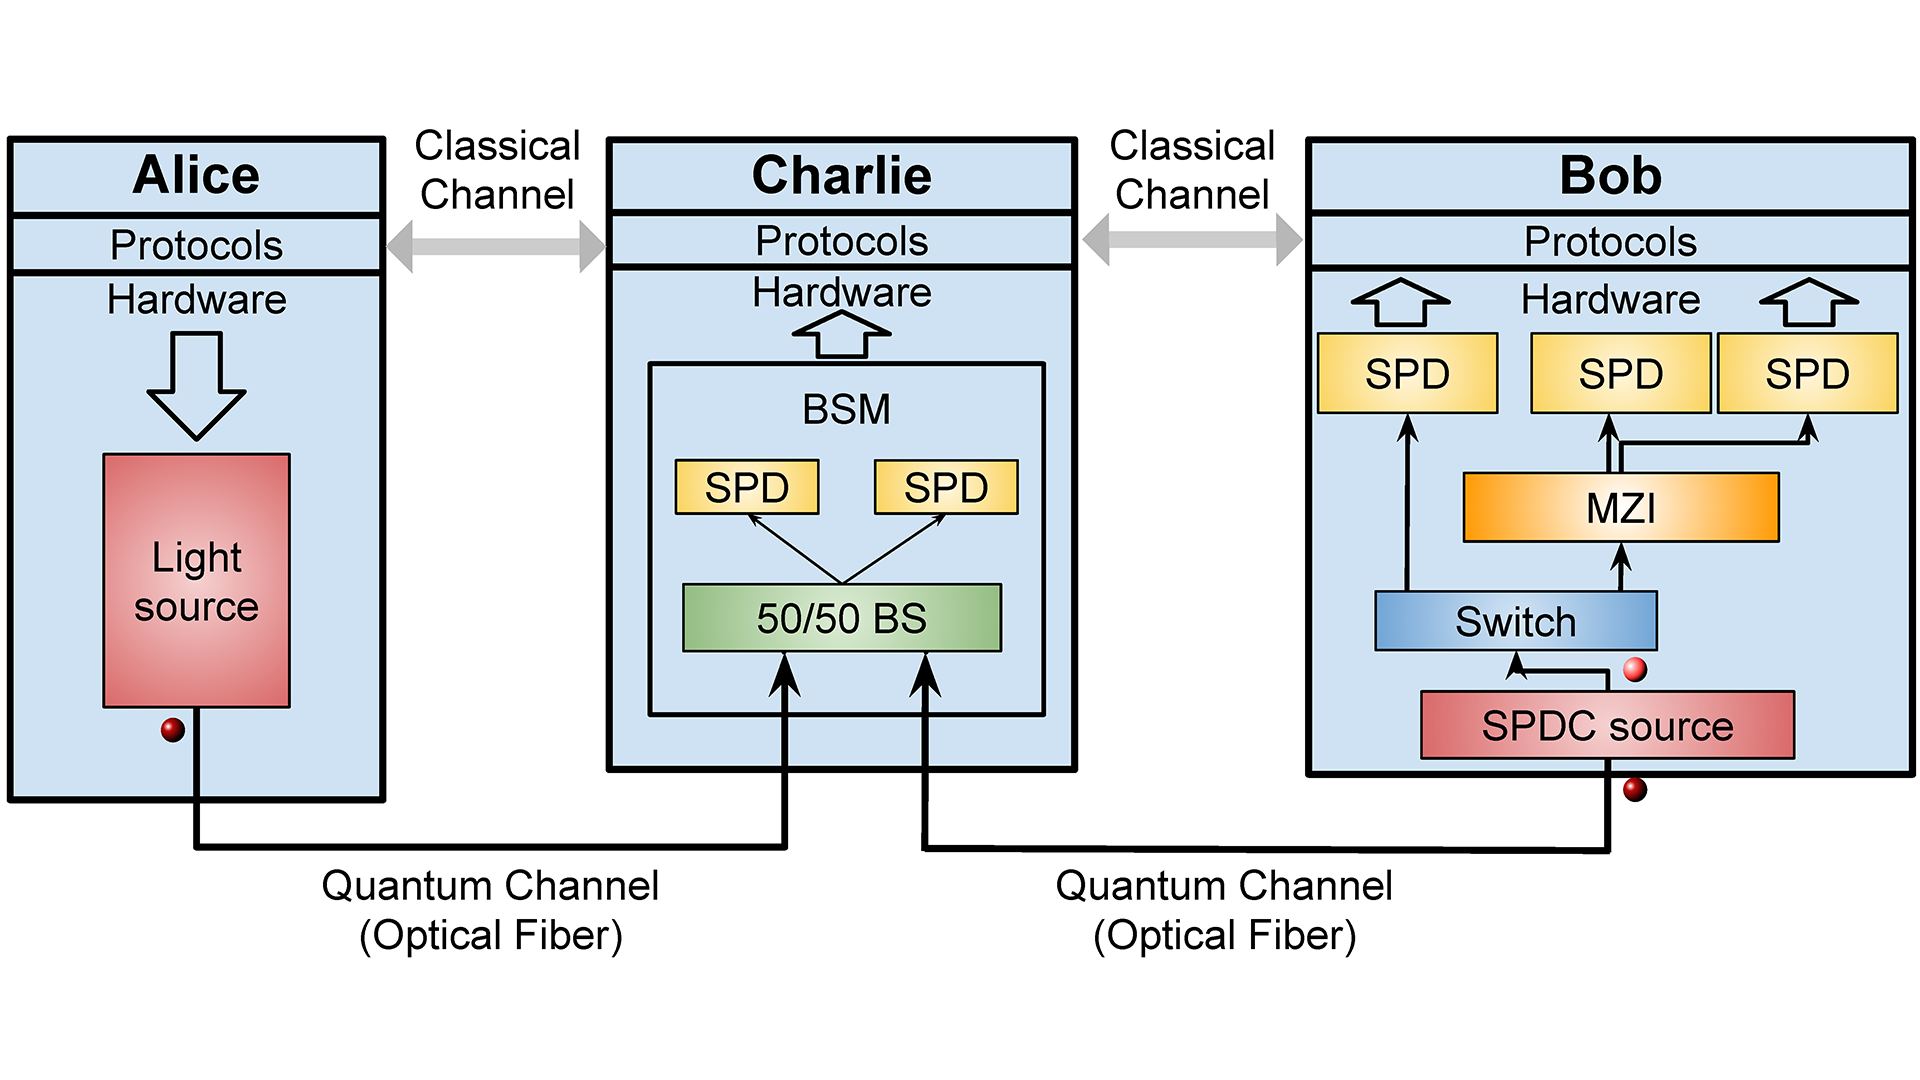 Diagram showing Quantum Channel (Optical Fiber) versus Classical Channel.